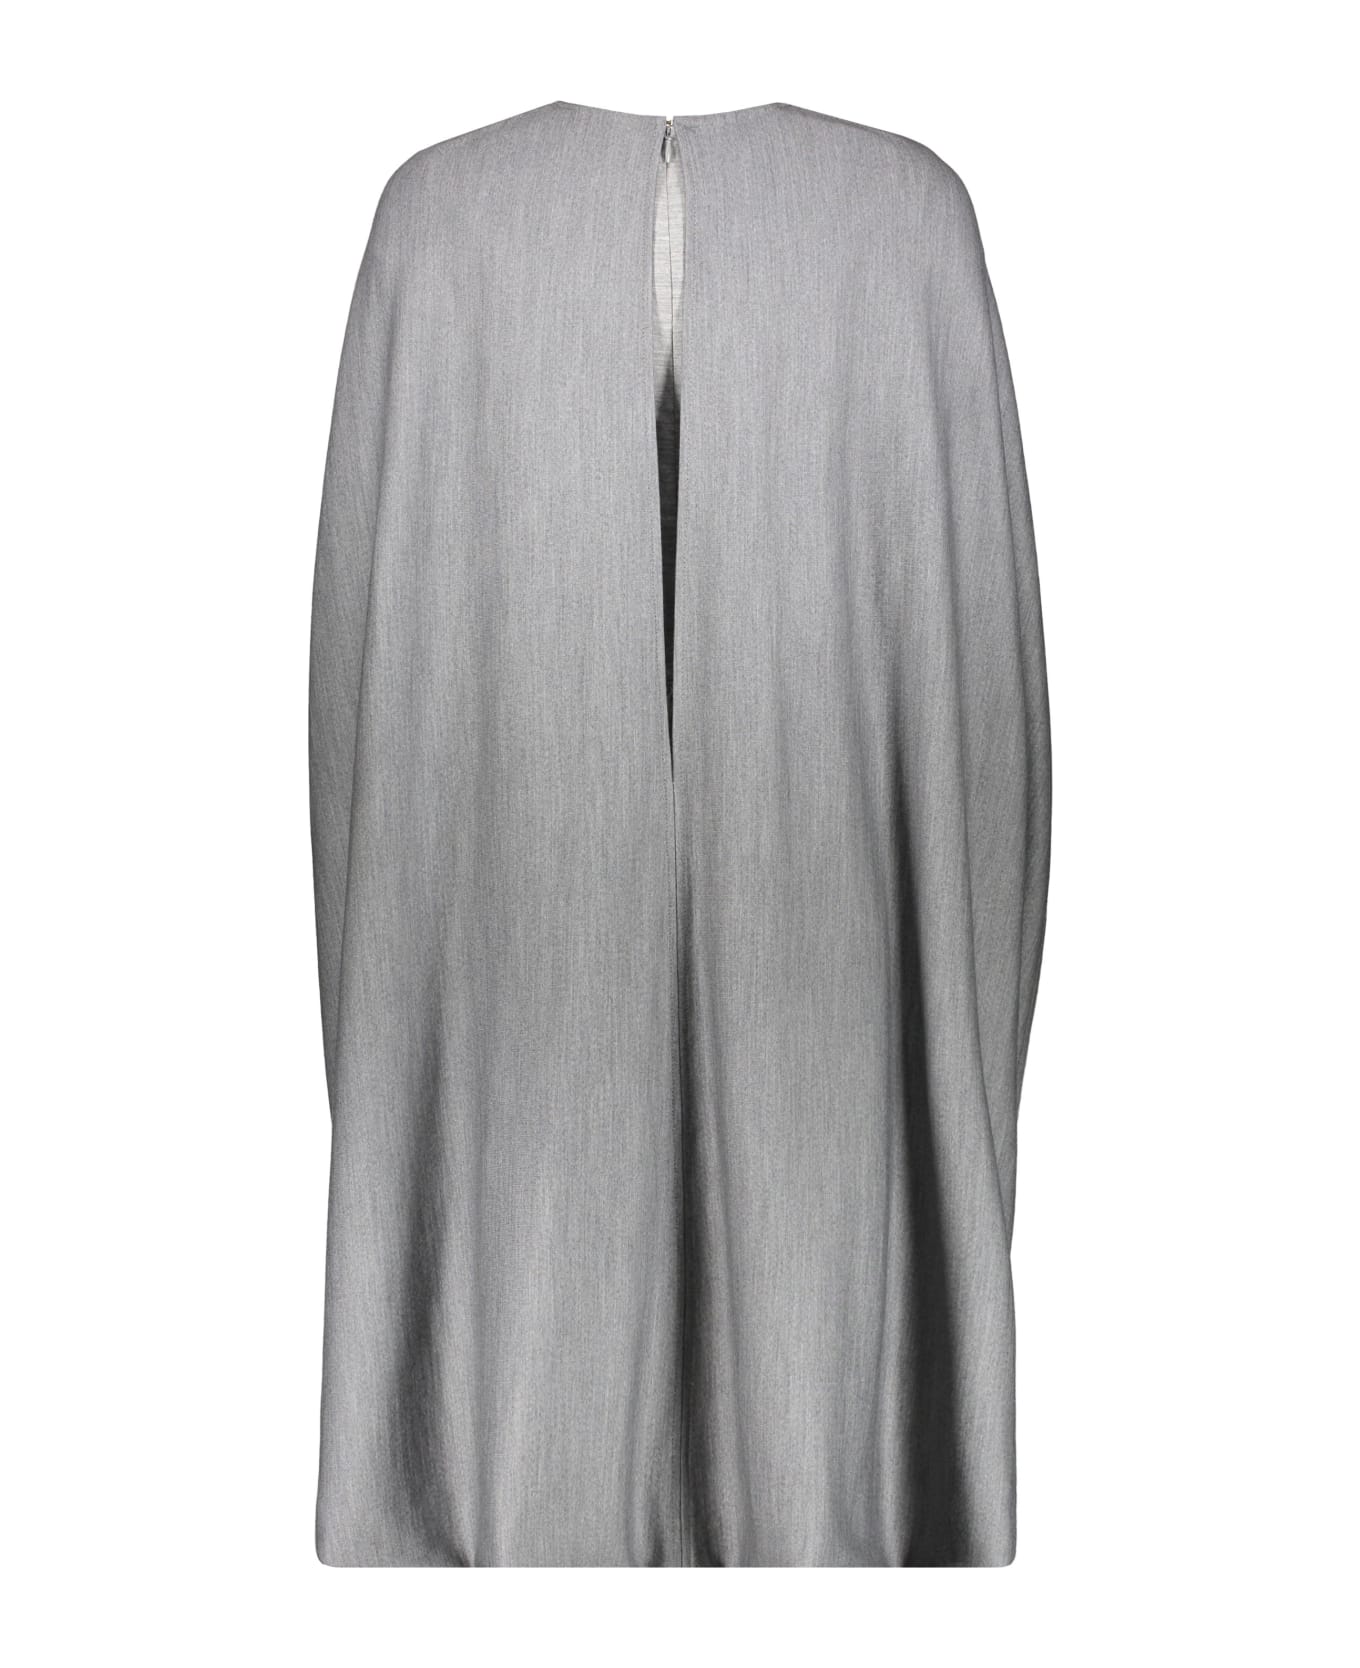 Burberry Cape-style Dress - grey